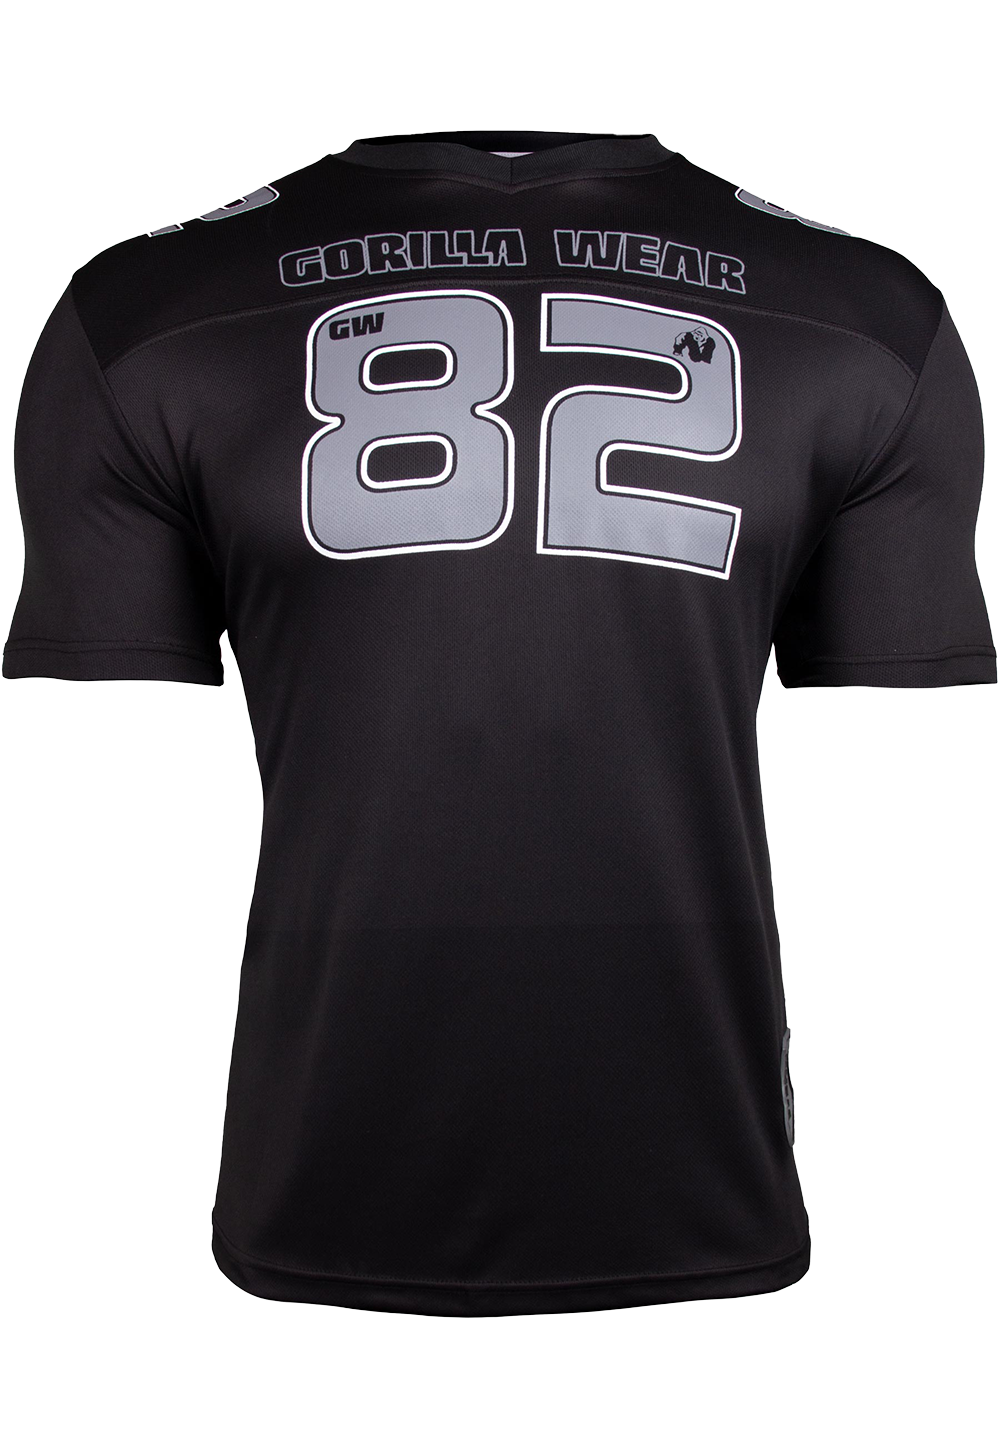 Футболка Fresno T-shirt Black/Gray от Gorilla Wear